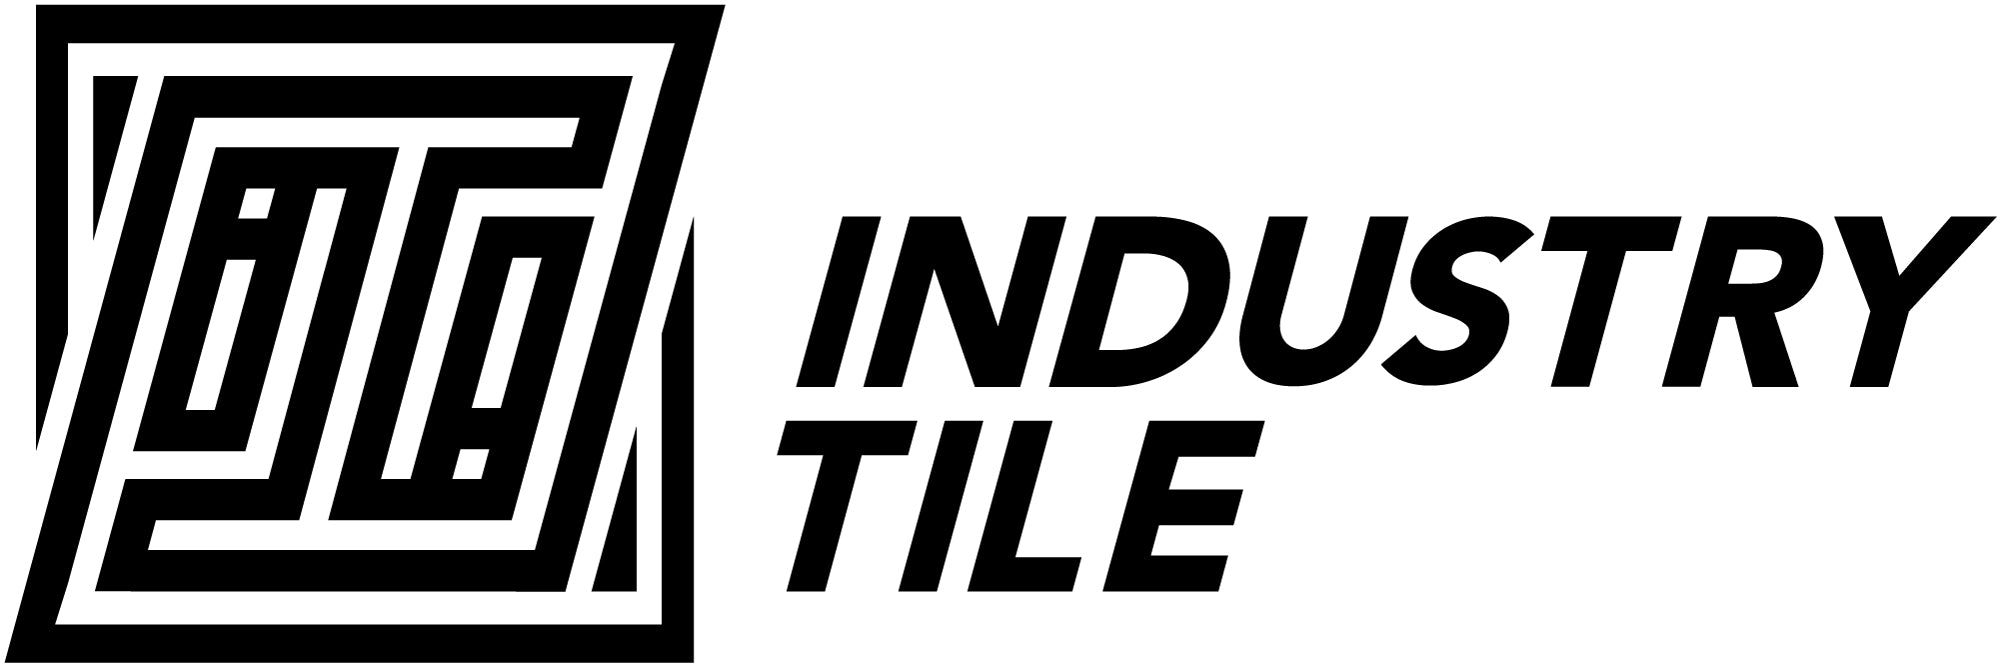 Free Tiles Logo Designs - DIY Tiles Logo Maker - Designmantic.com